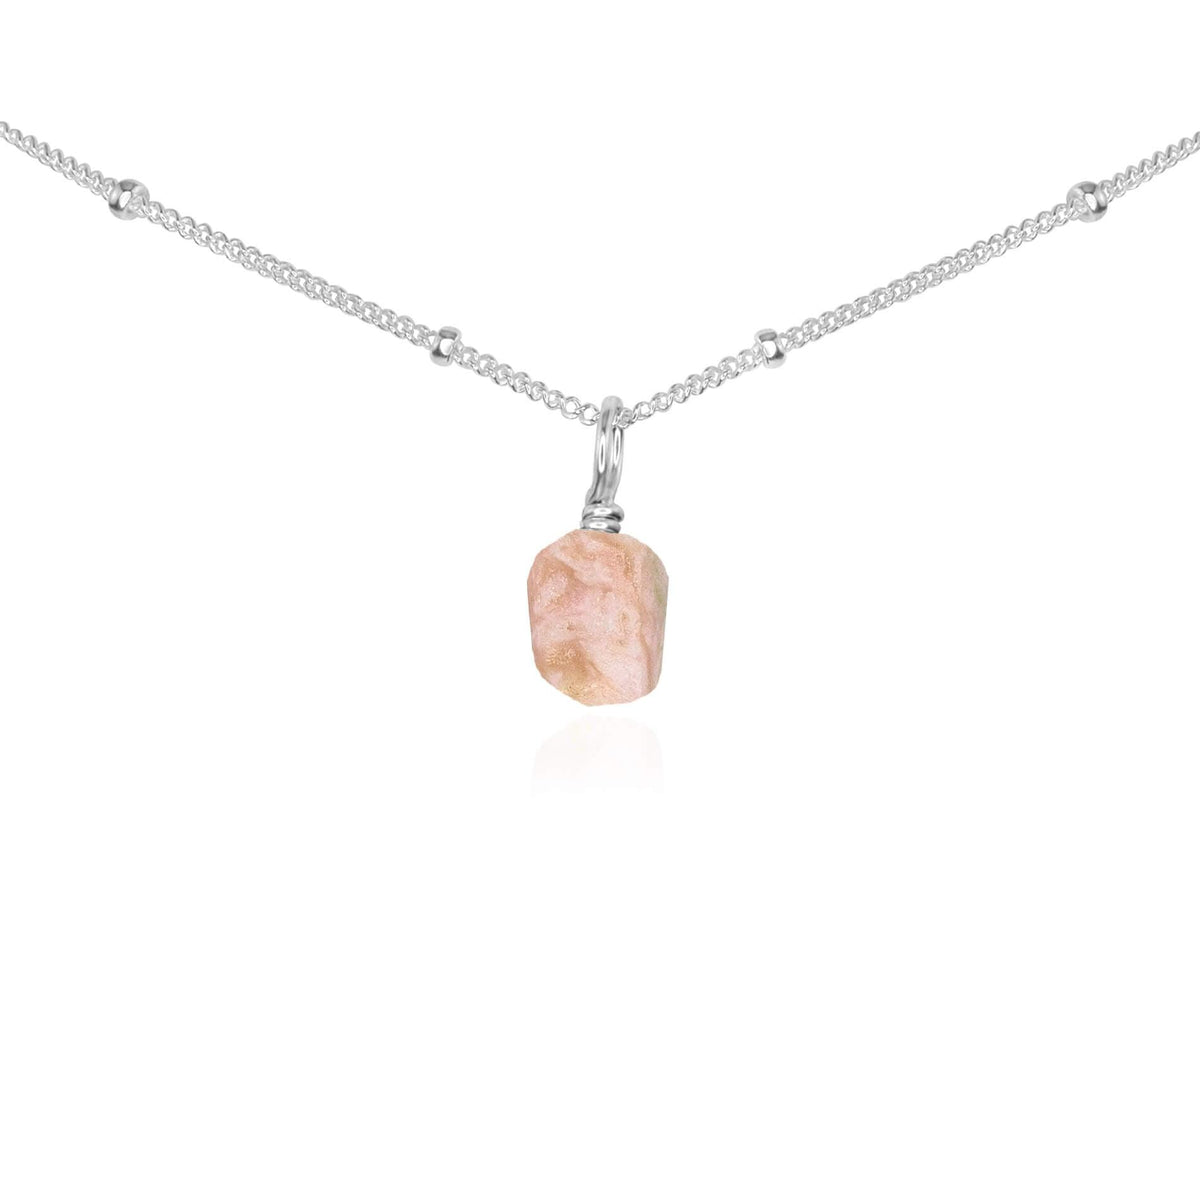 Tiny Rough Pink Peruvian Opal Gemstone Pendant Choker - Tiny Rough Pink Peruvian Opal Gemstone Pendant Choker - Sterling Silver / Satellite - Luna Tide Handmade Crystal Jewellery